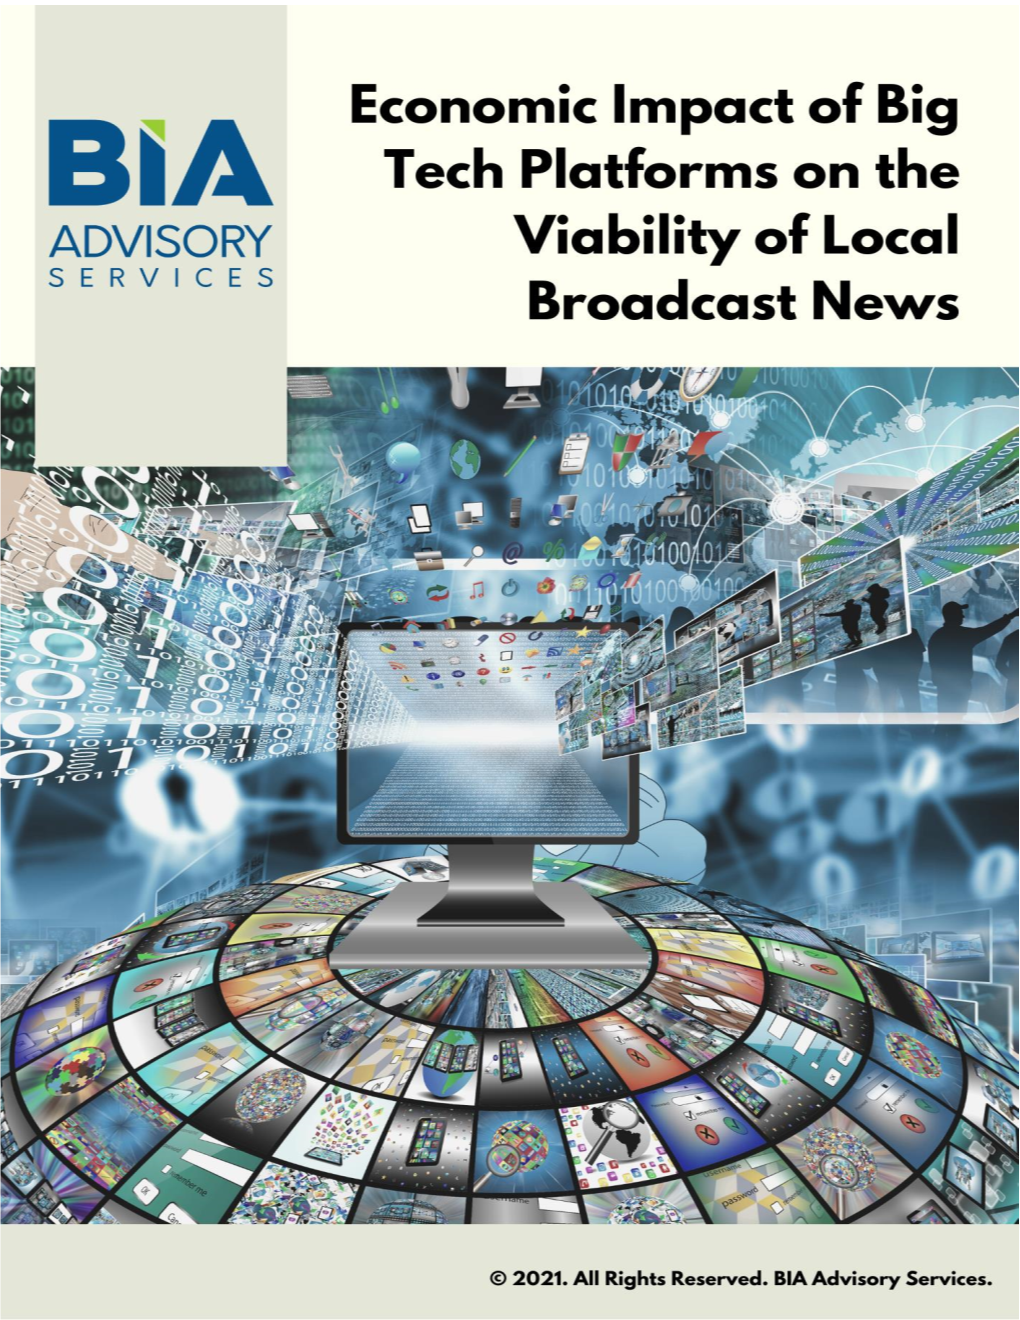 Economic Impact of Big Tech Platforms on Local Broadcast News